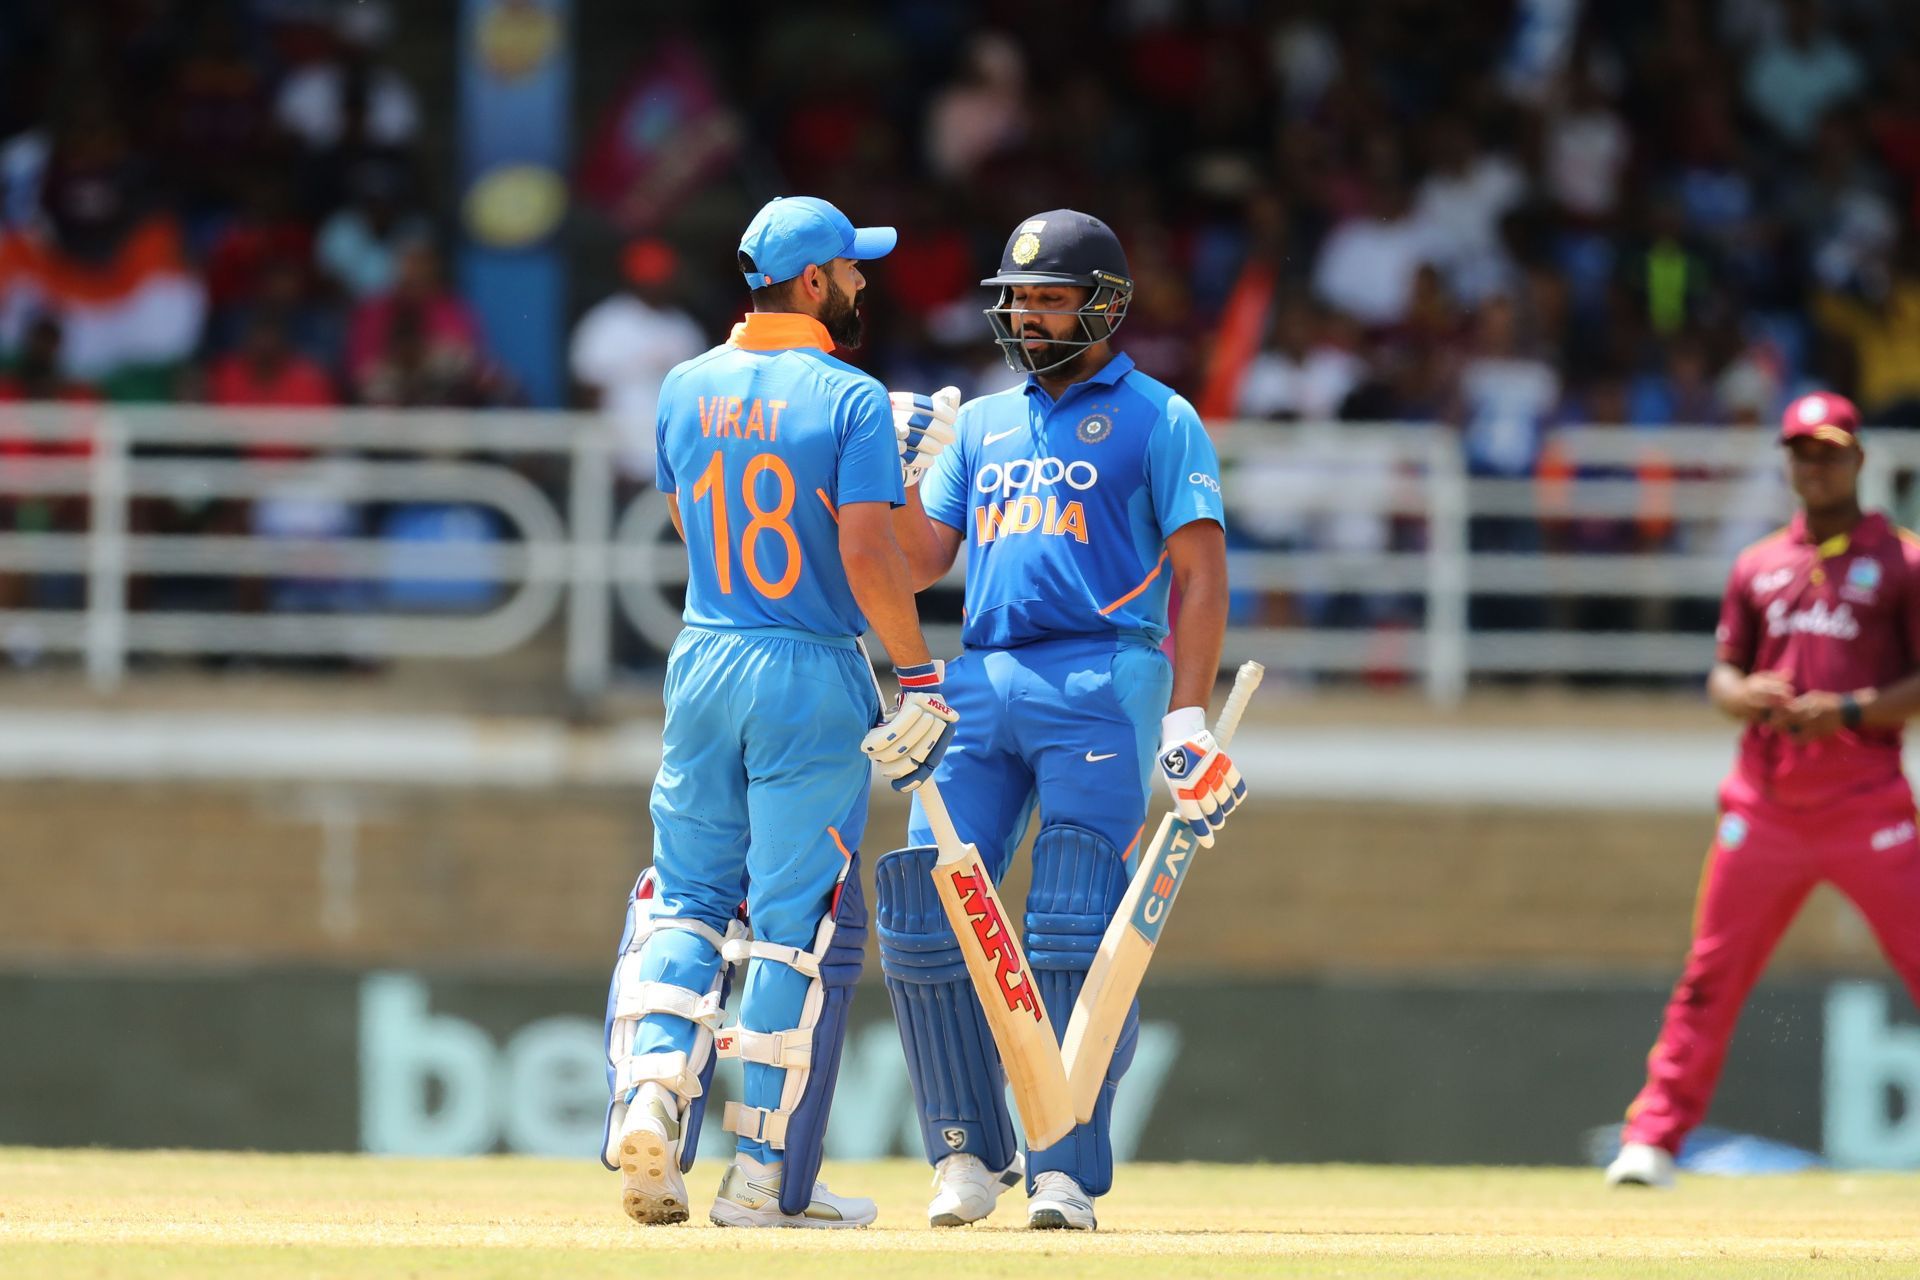 Virat Kohli and Rohit Sharma have won many matches for Team India